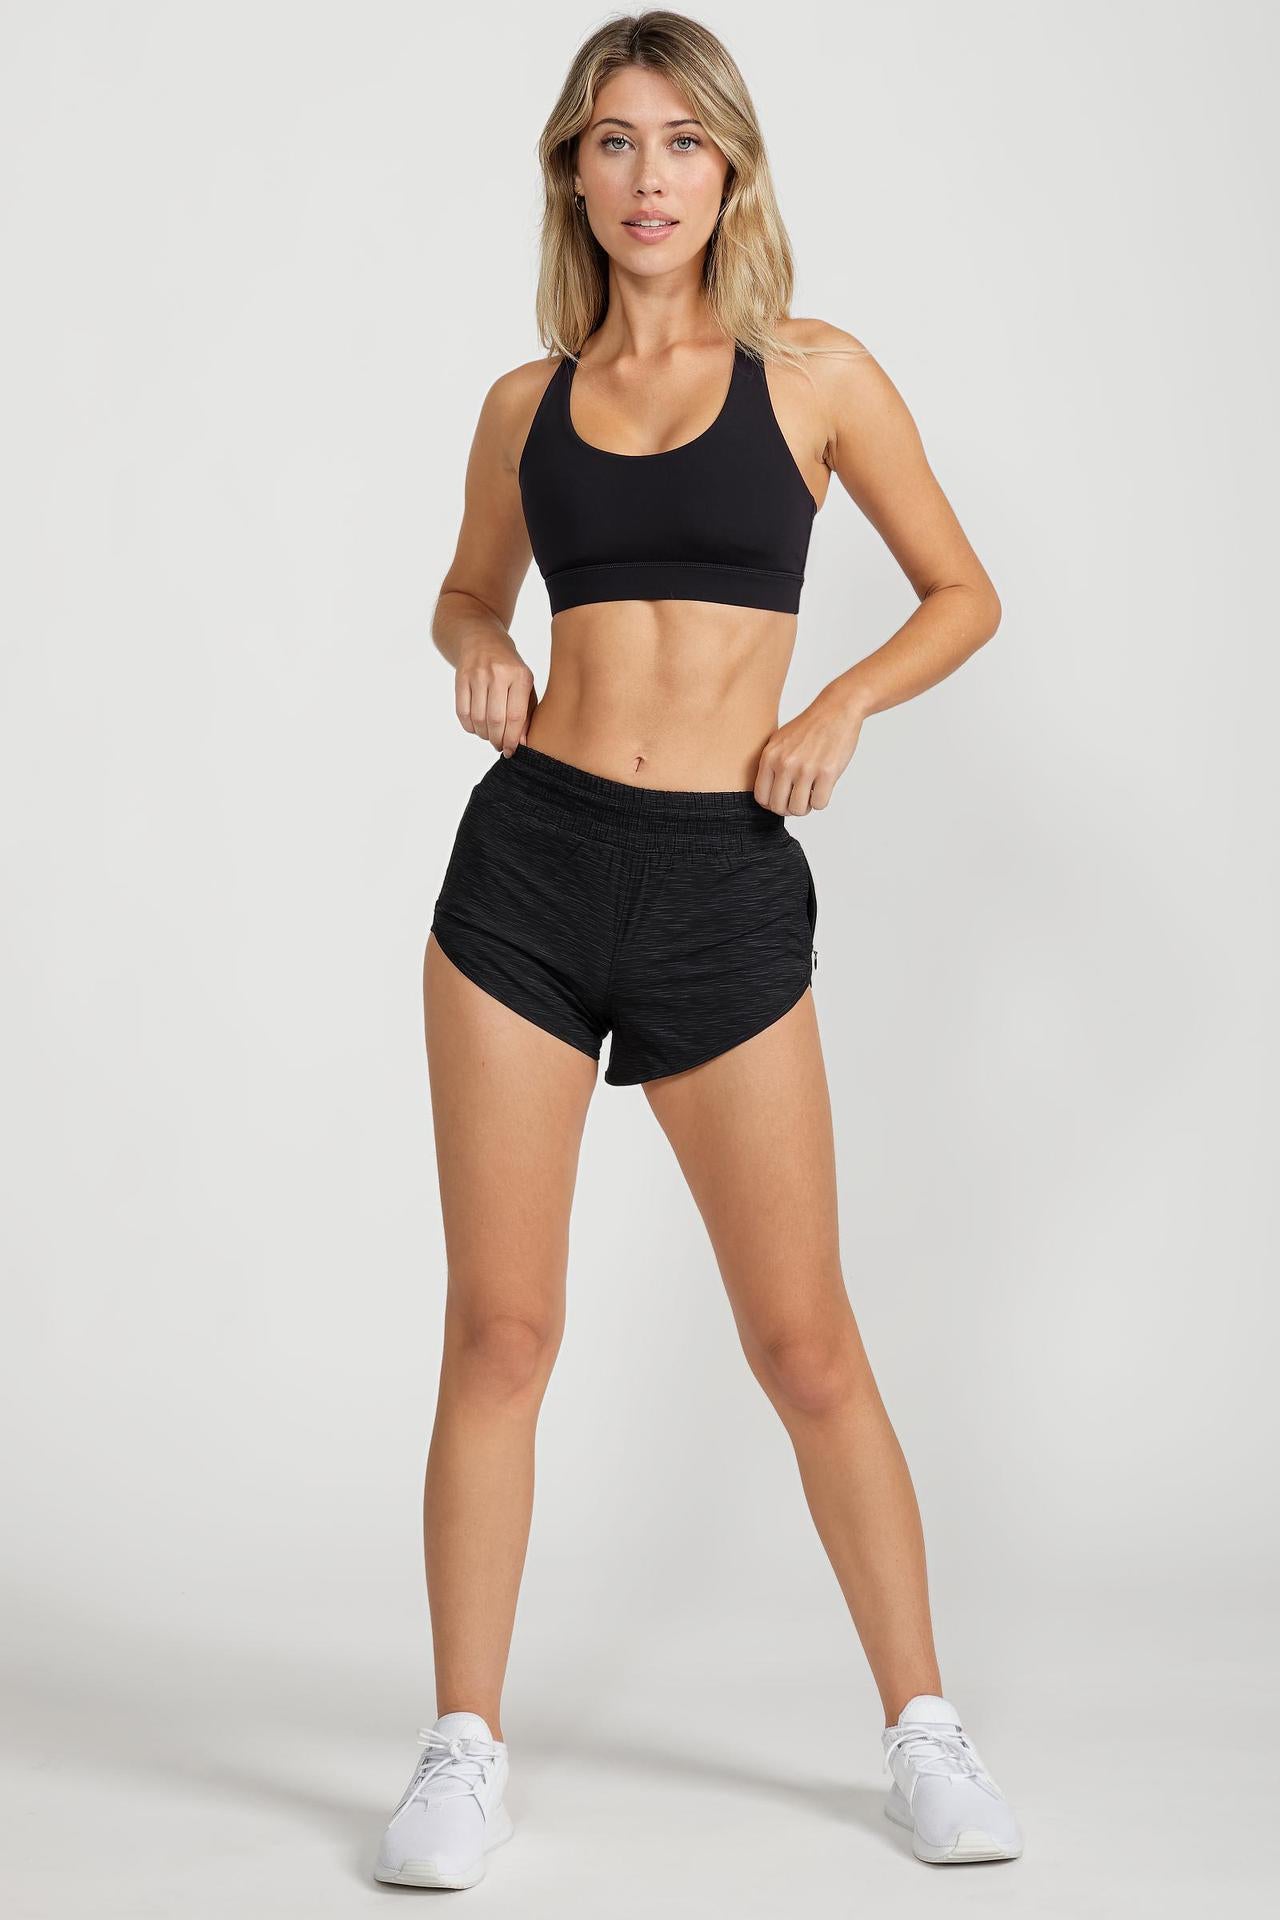 Women's Workout Shorts